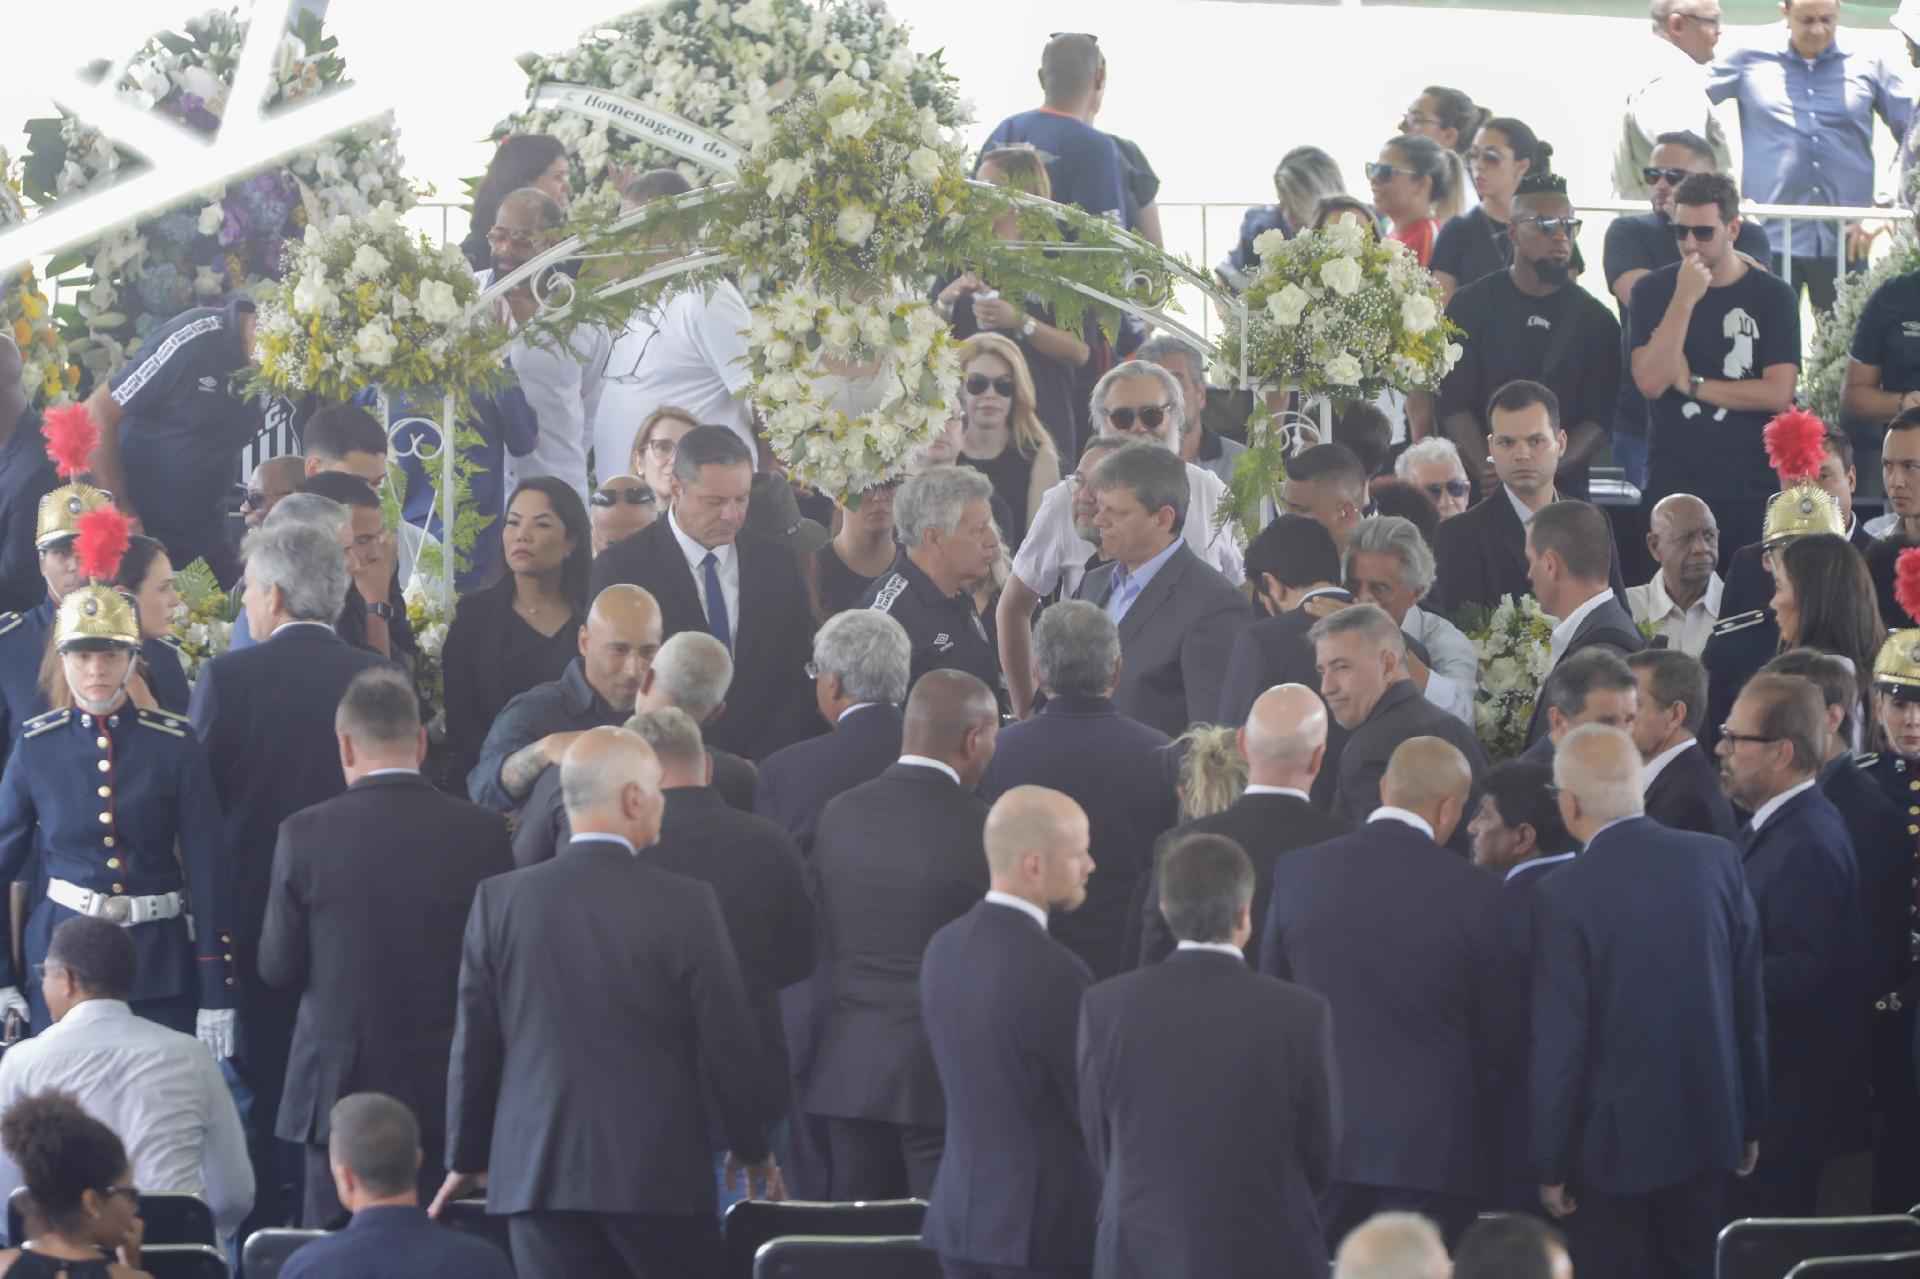 Movement around Pele's coffin while awake - Marcelo Giusto / UOL